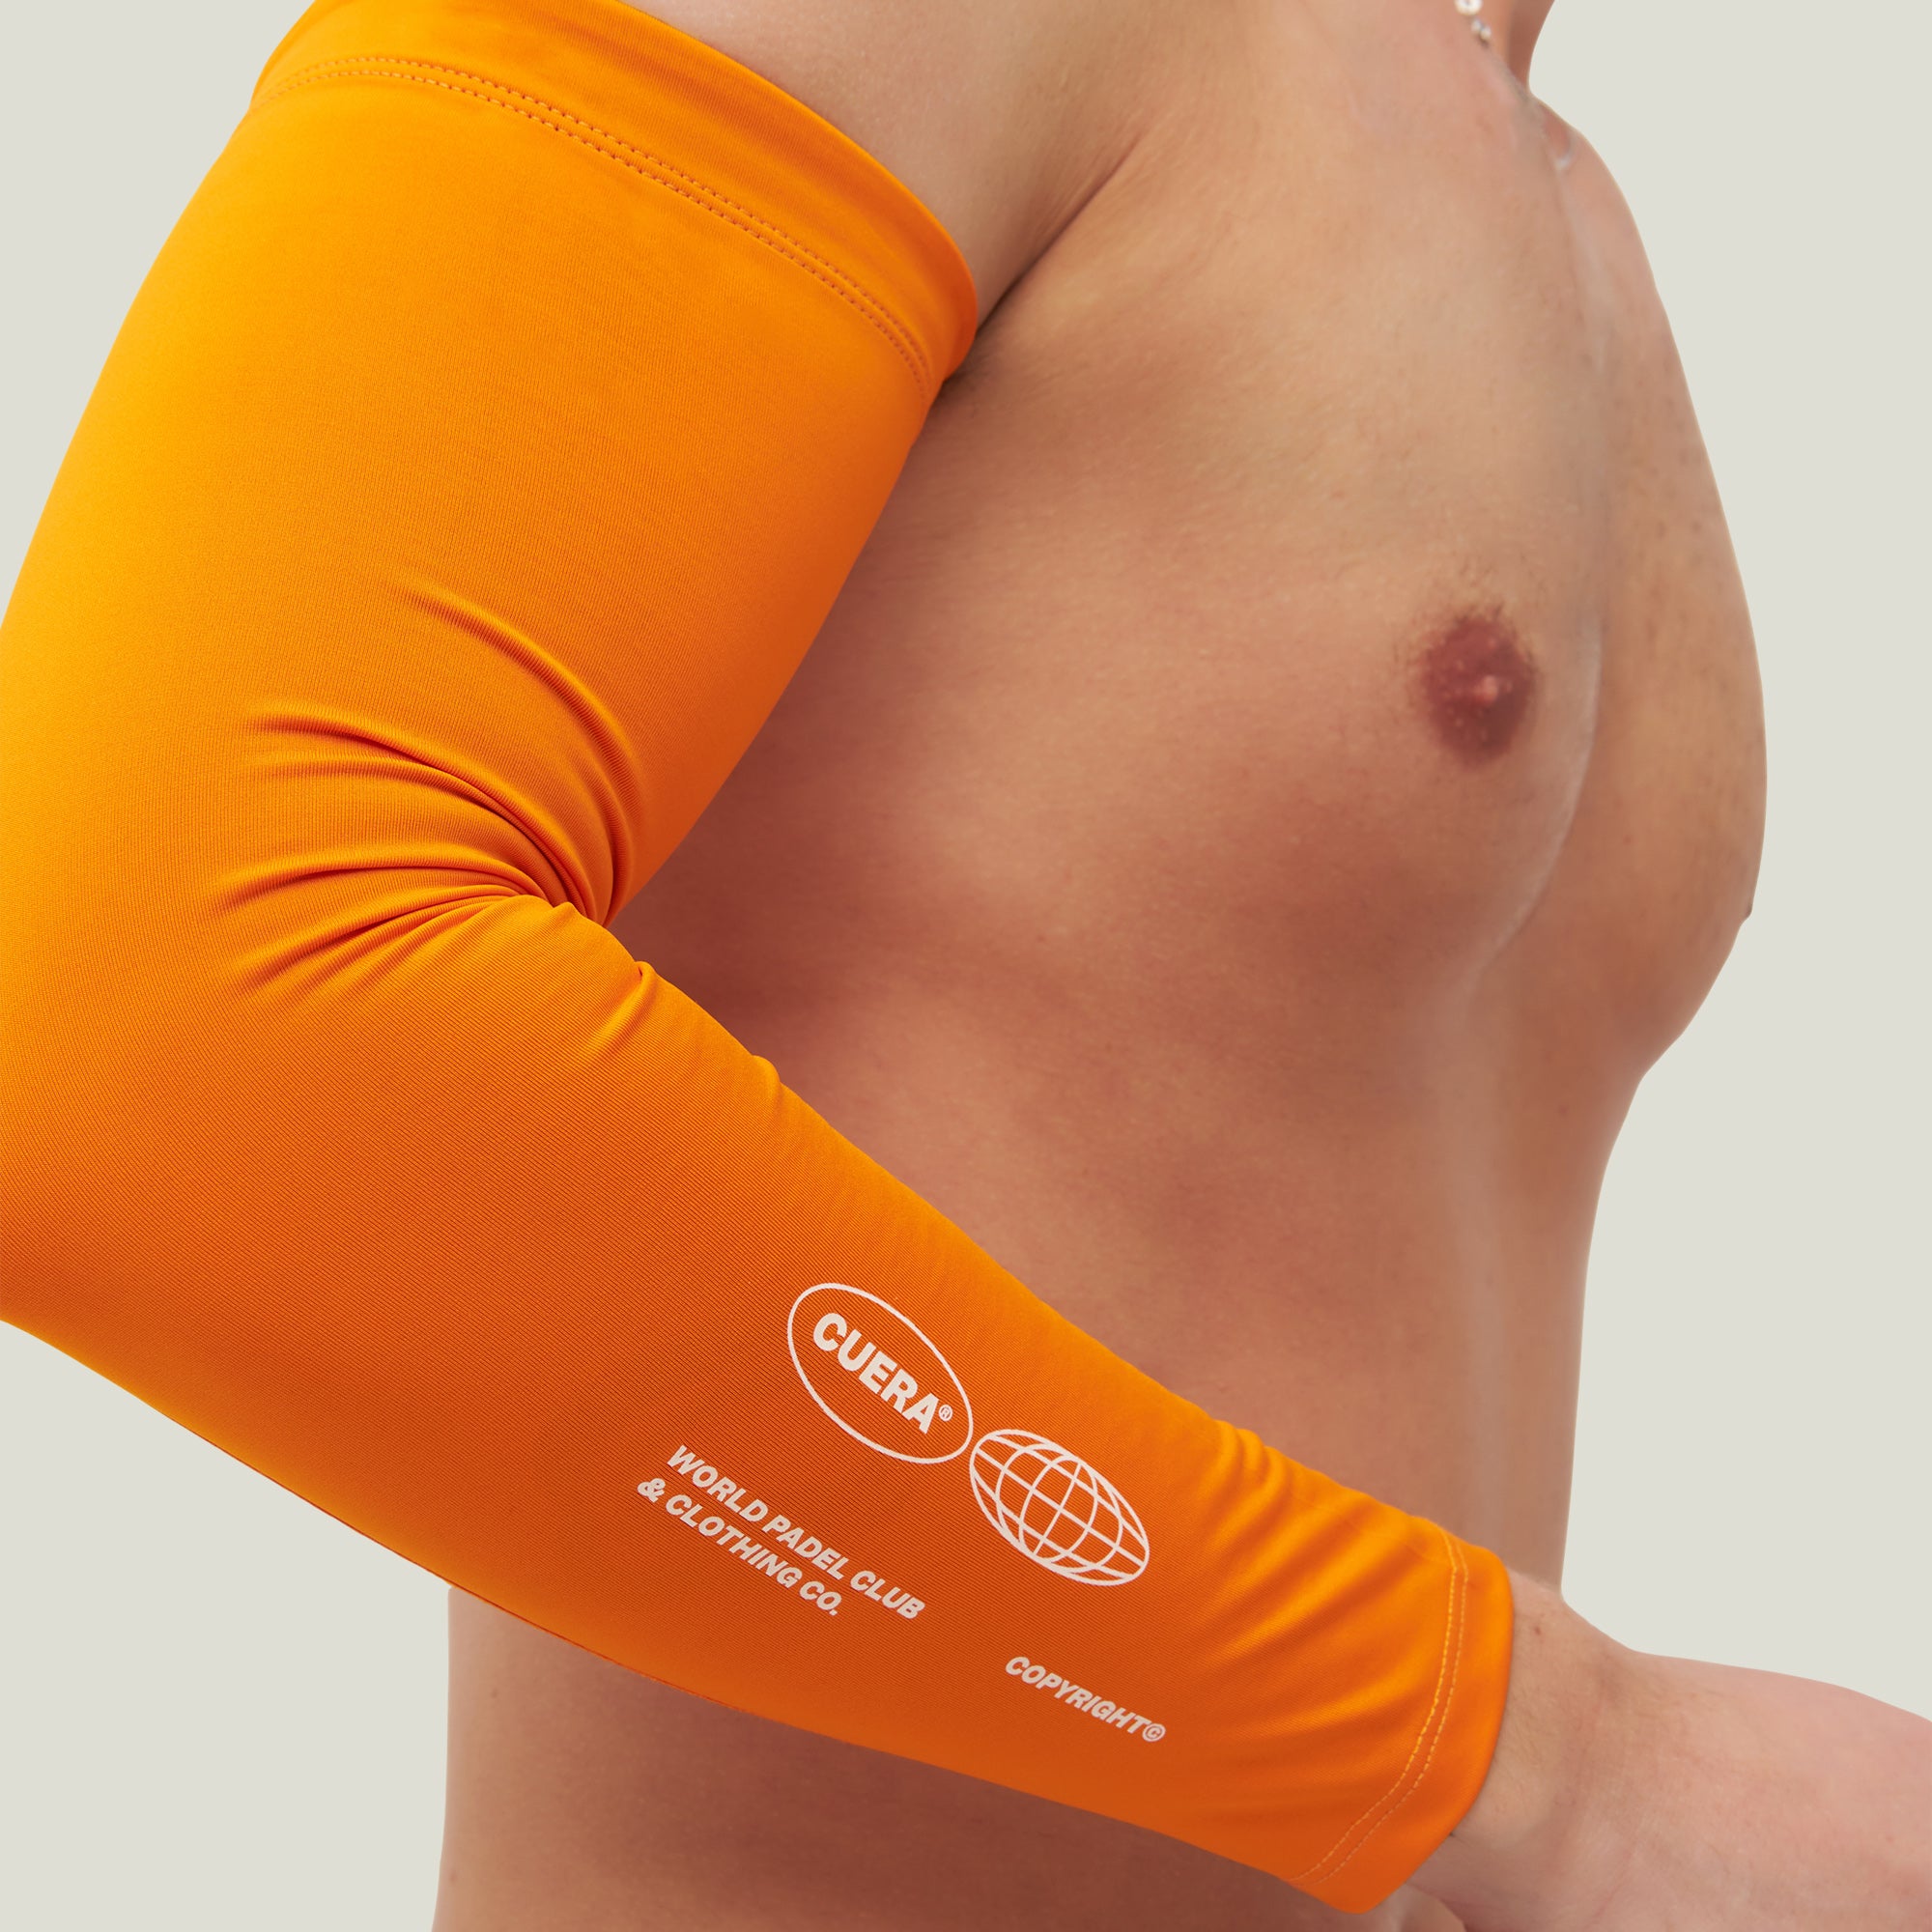 Cuera Oncourt Arm Sleeve (Orange) - S/M